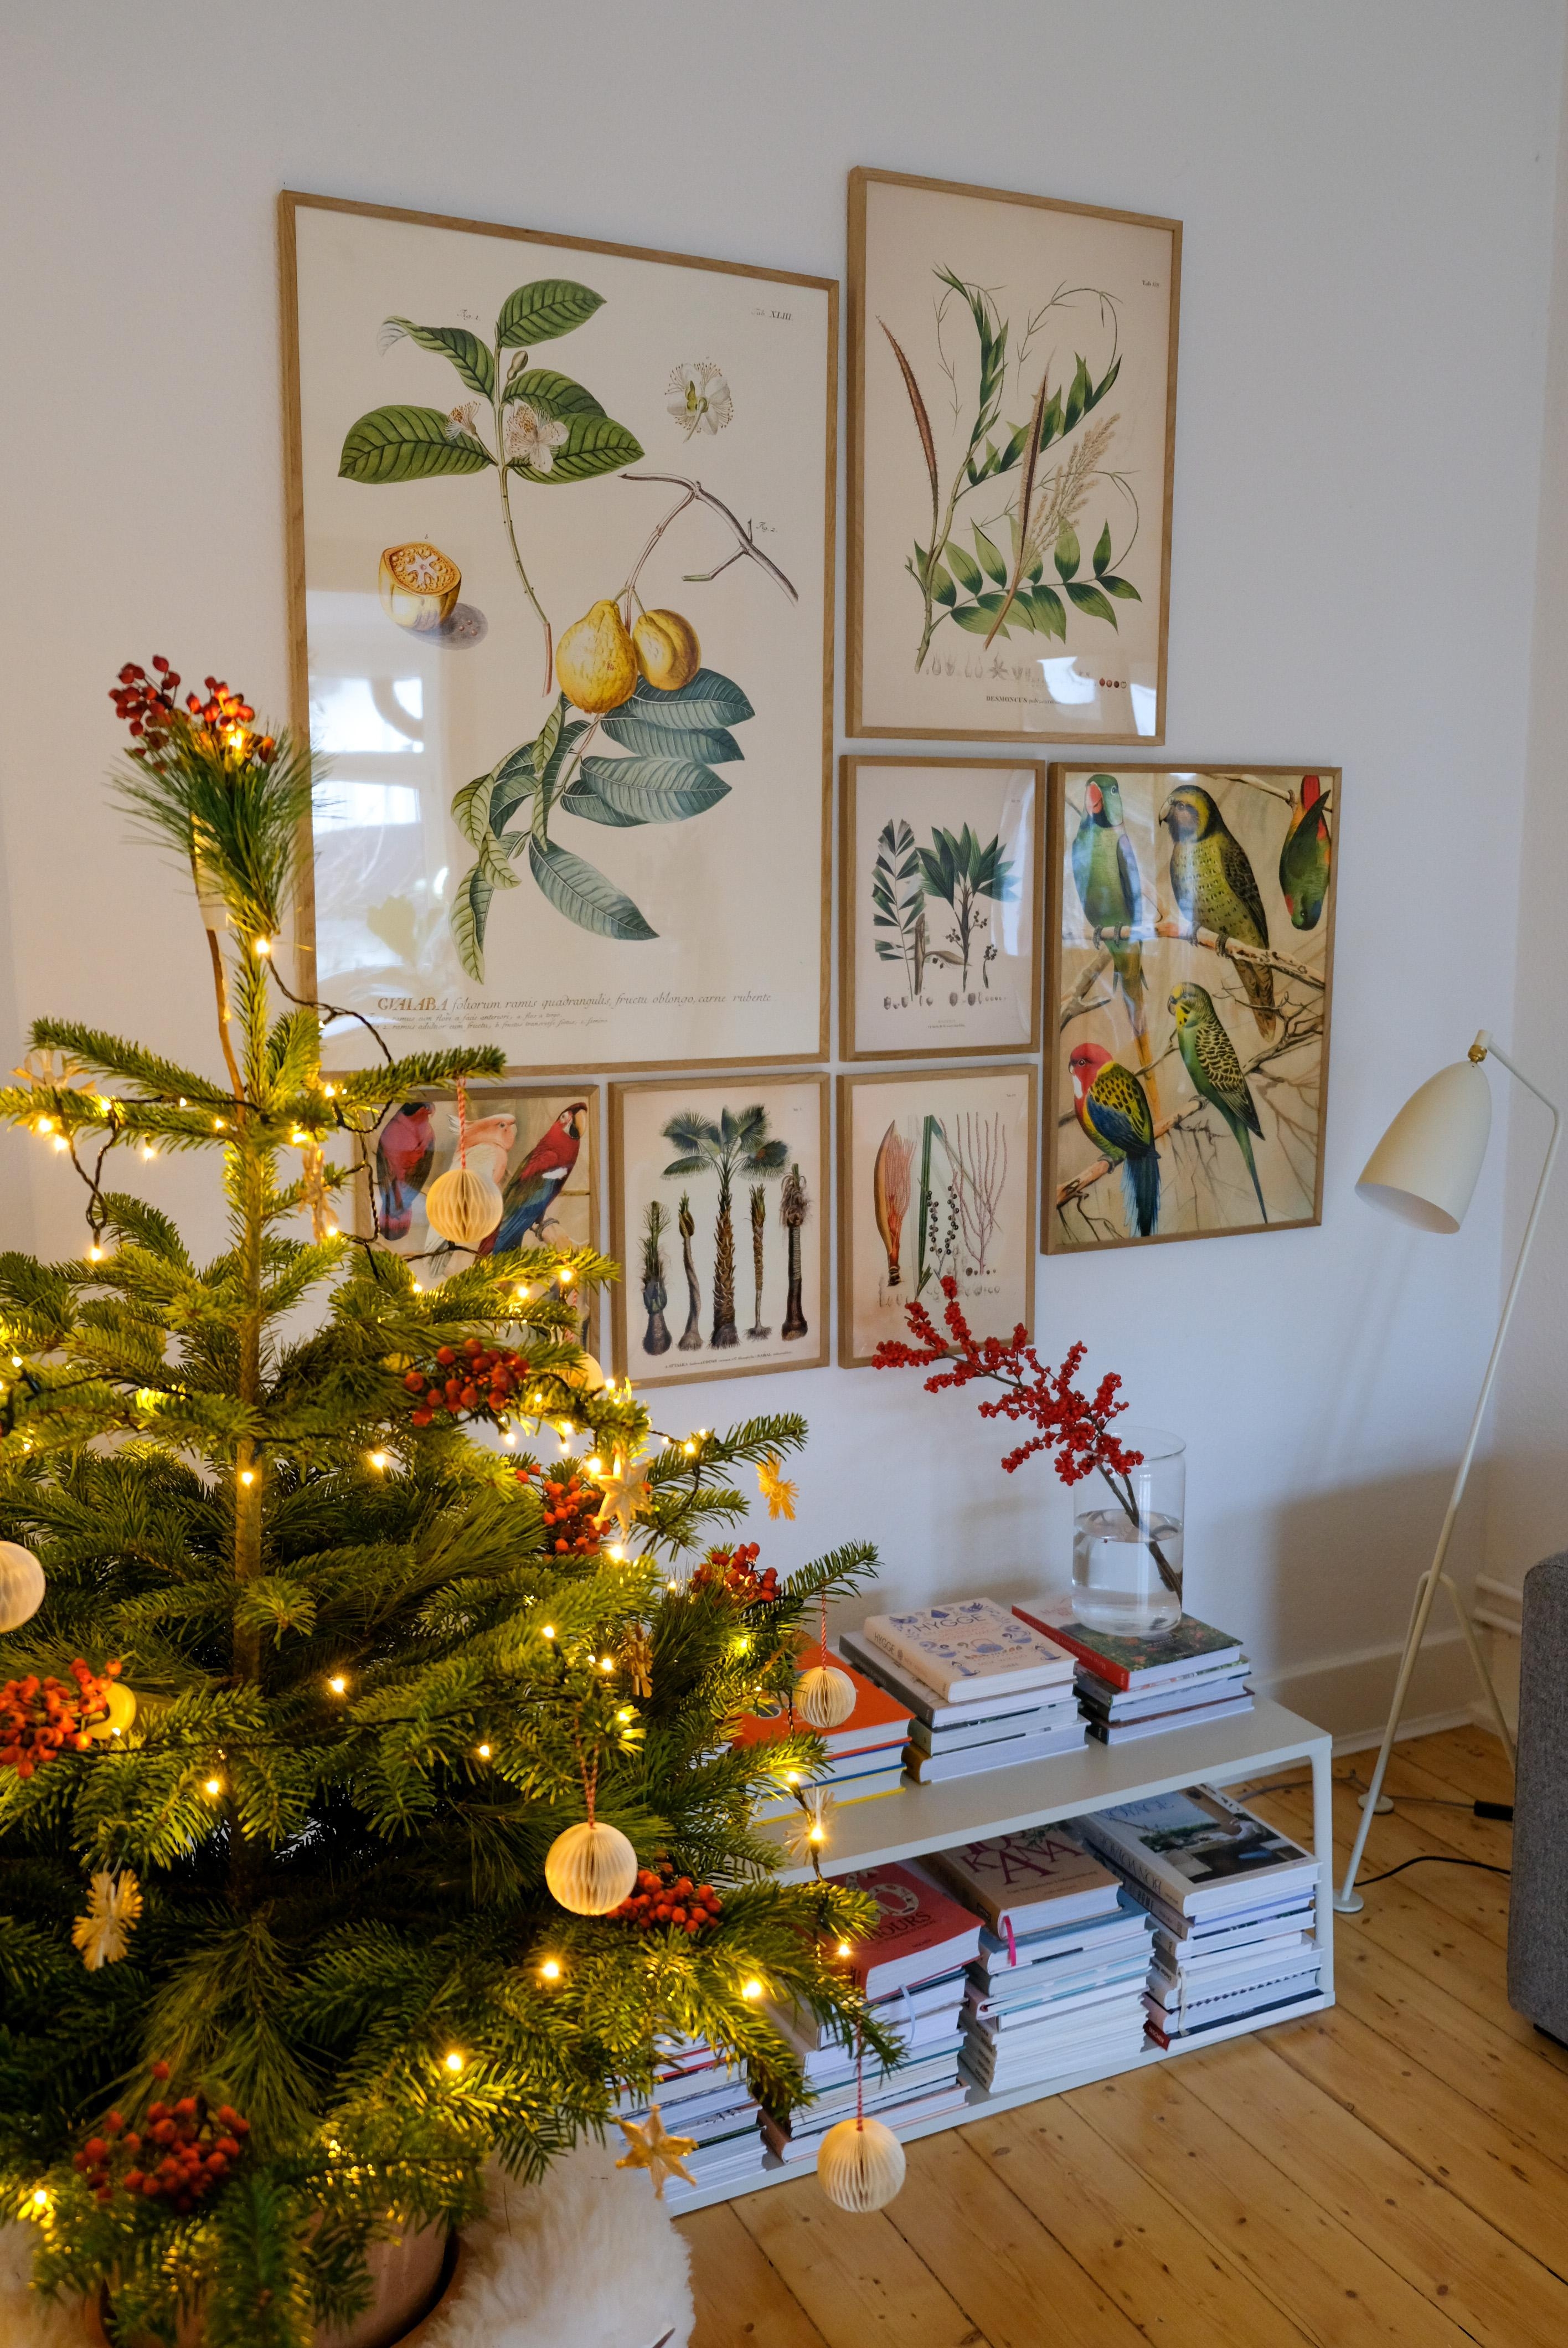 Fröhlichen 4. Advent! ✨🎄 #mynordicroom #interior #colourfulhome